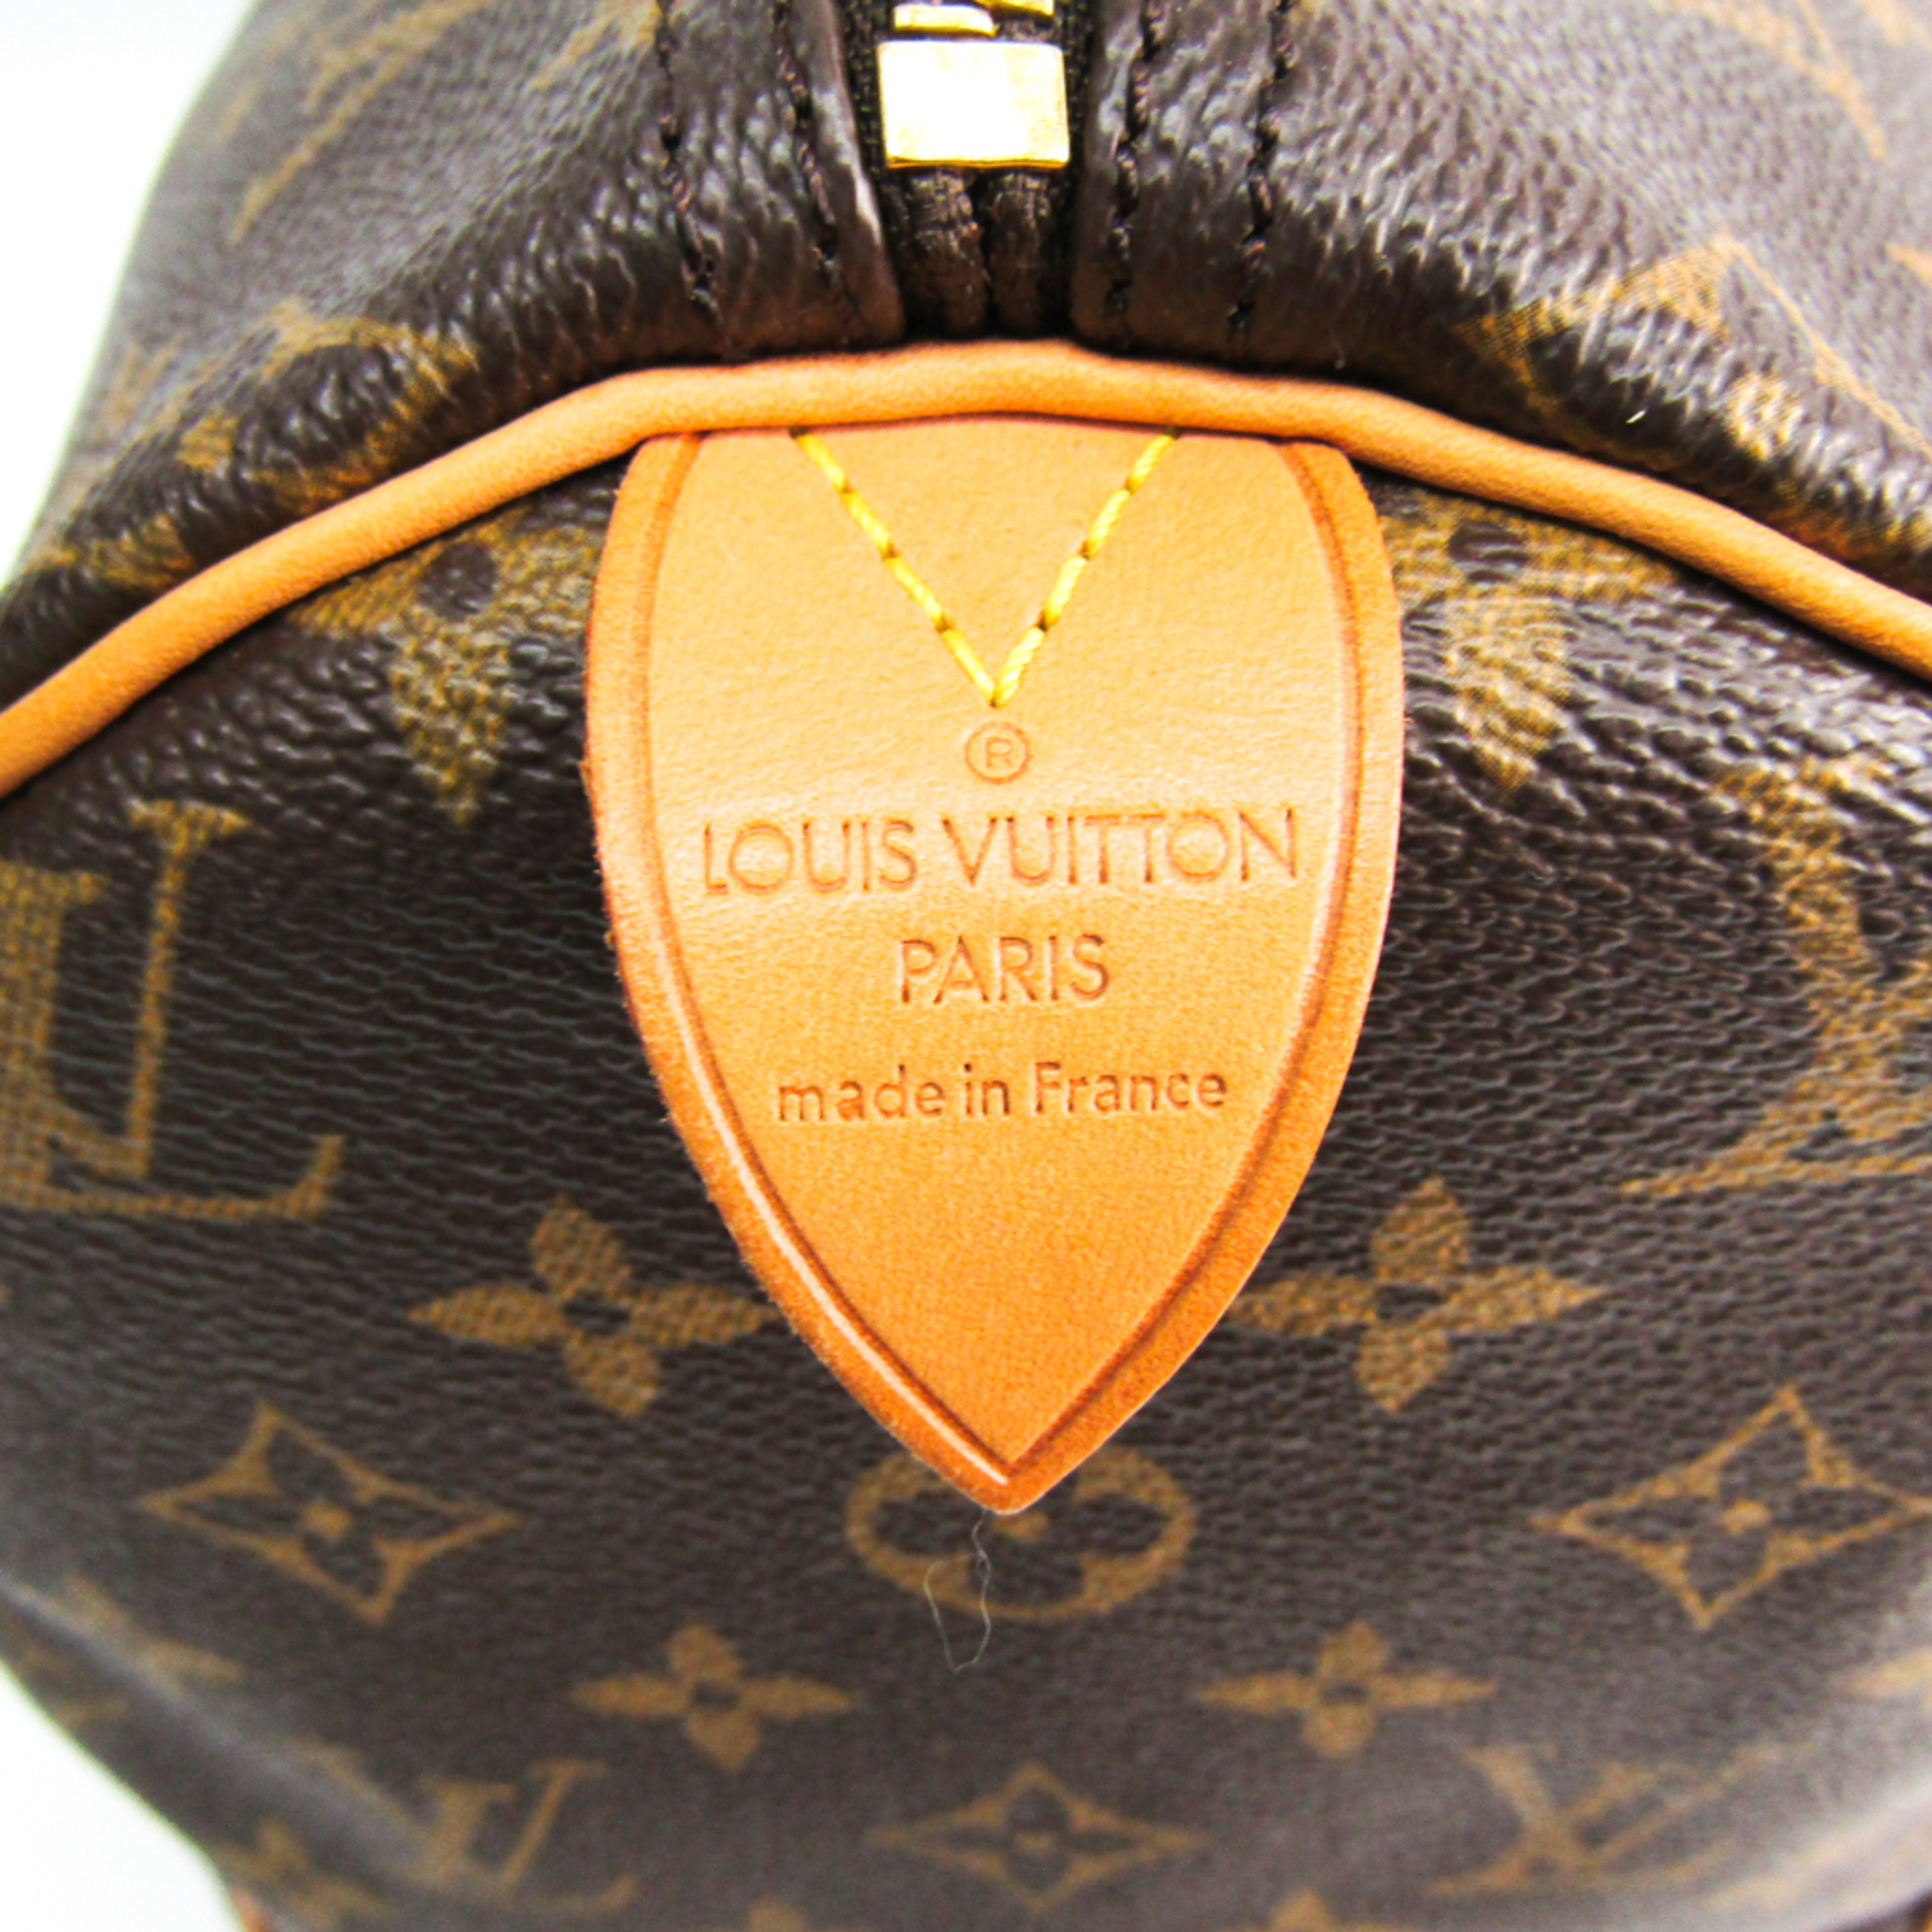 Louis Vuitton Monogram Speedy 40 M41522 Women's Handbag Monogram